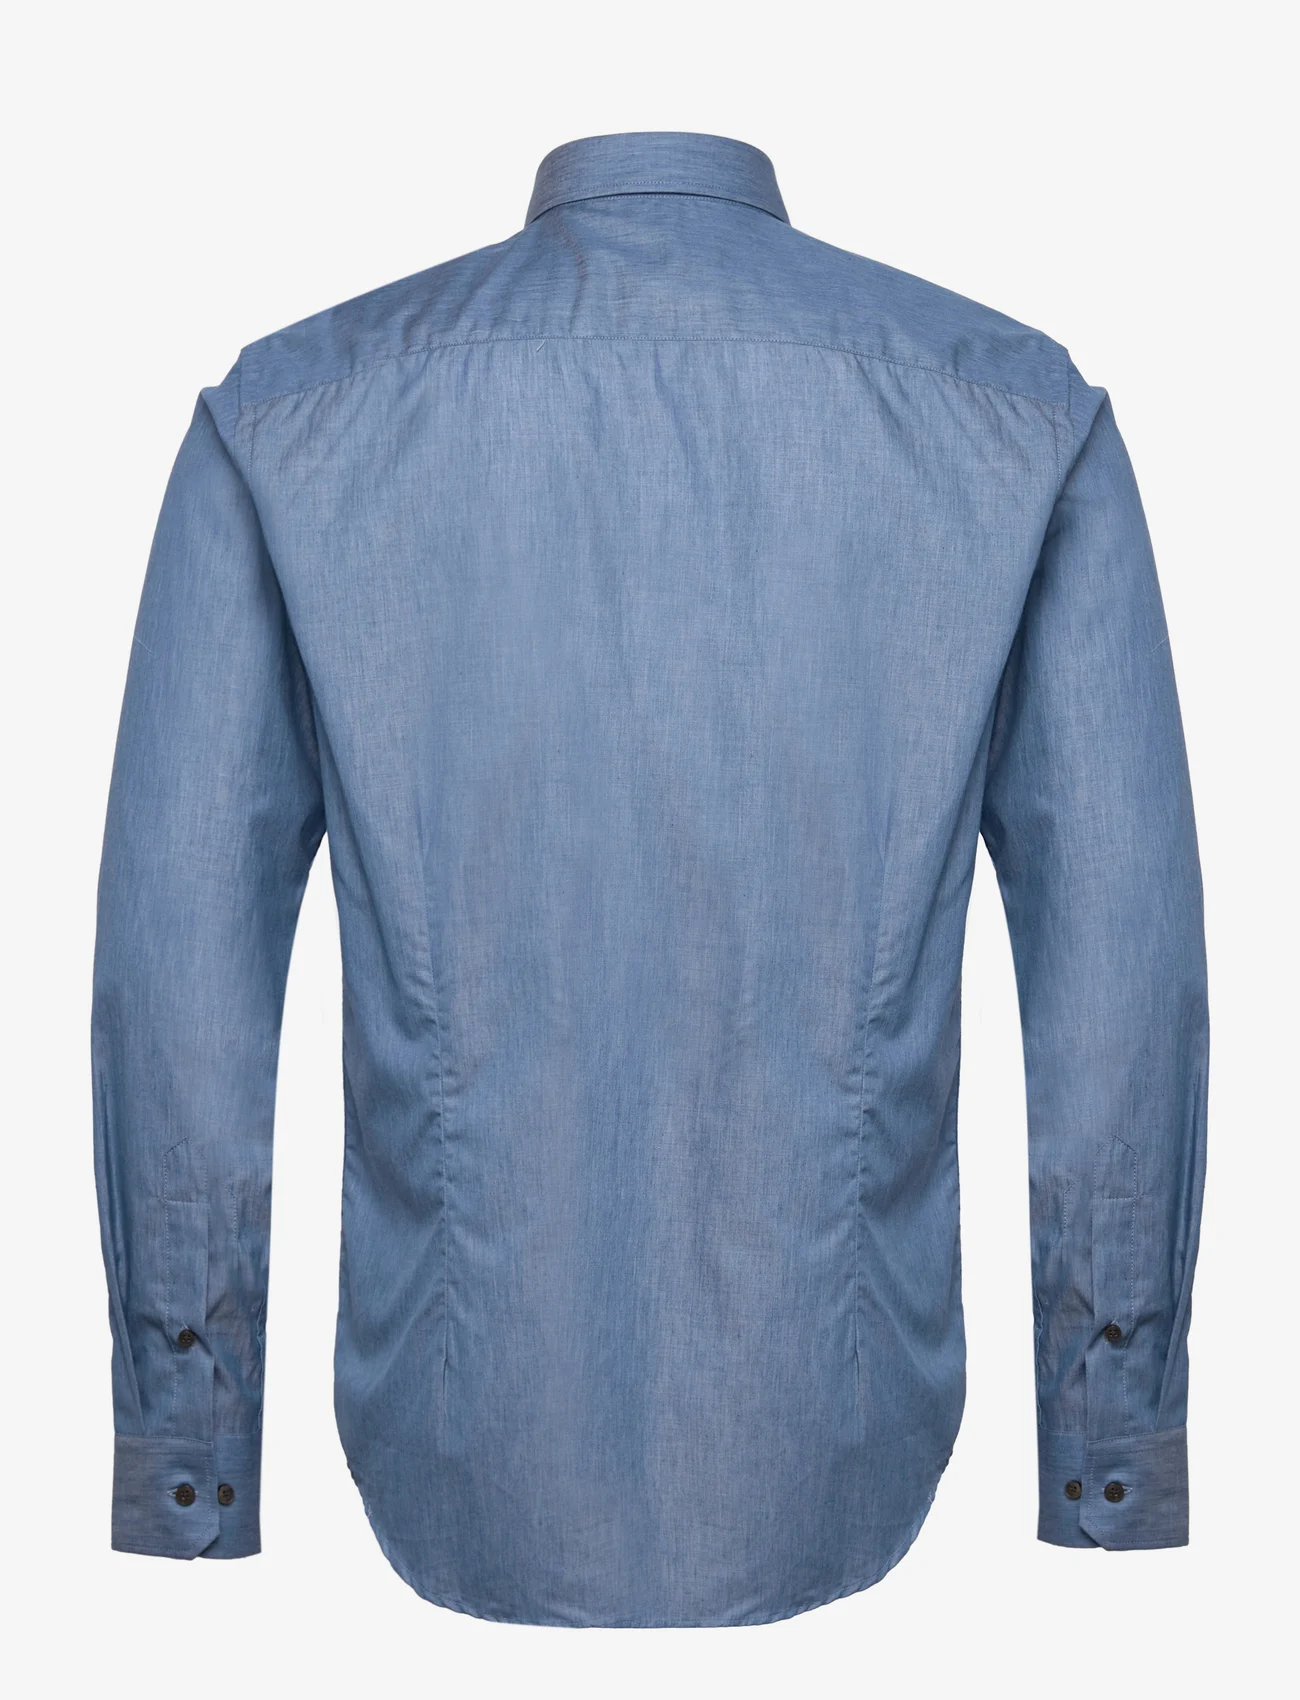 Bosweel Shirts Est. 1937 - Slim fit Mens shirt - basic shirts - blue - 1